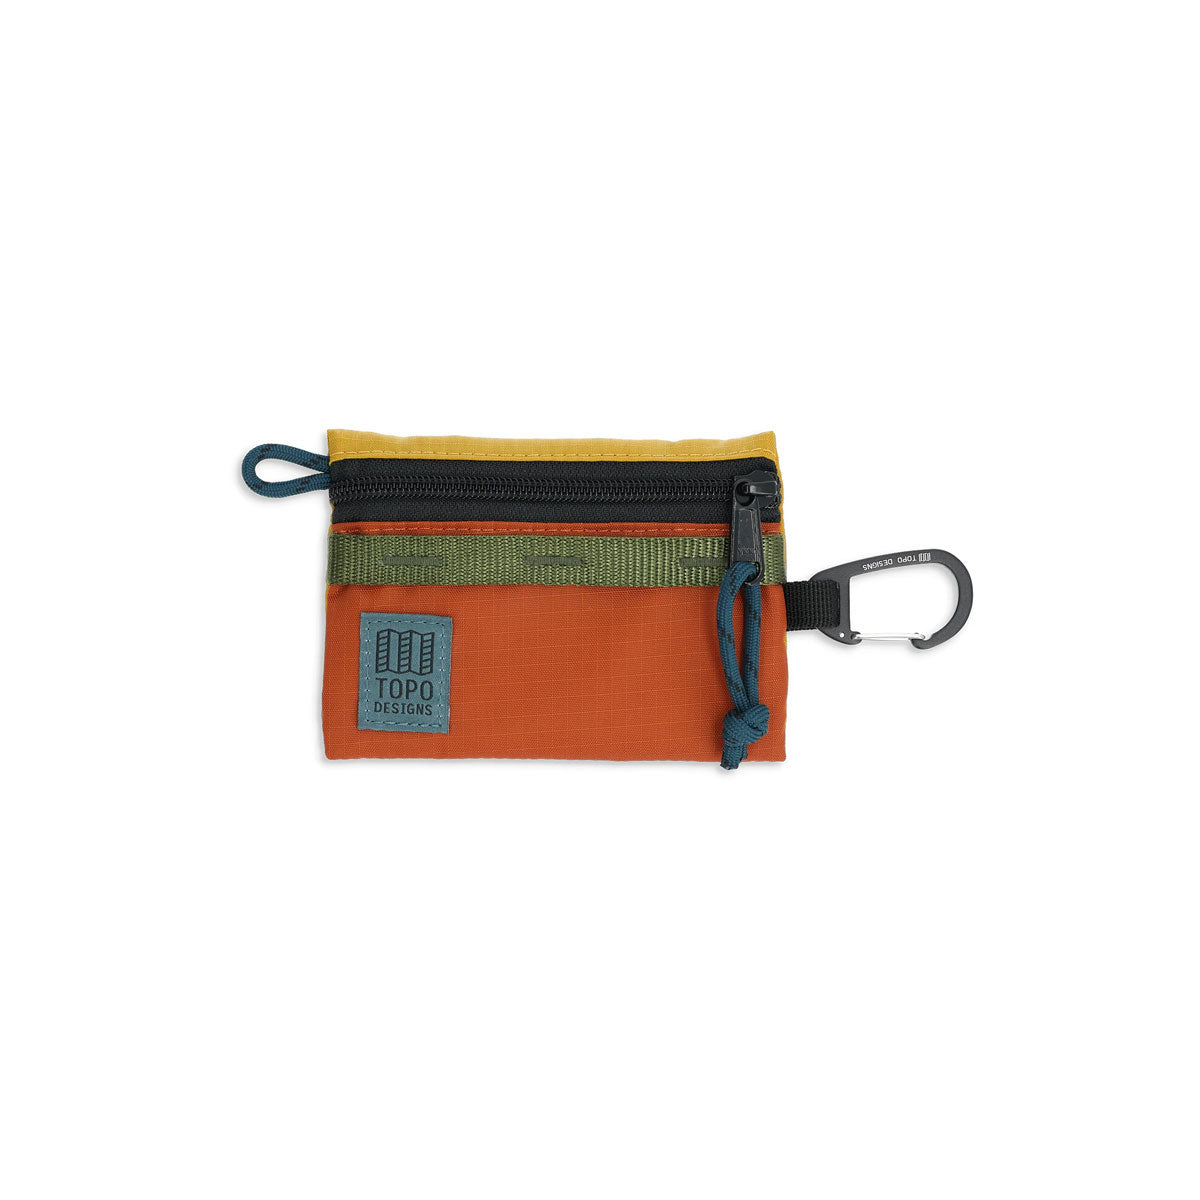 Topo Designs : Mountain Accessory Bag : Mustard/Clay